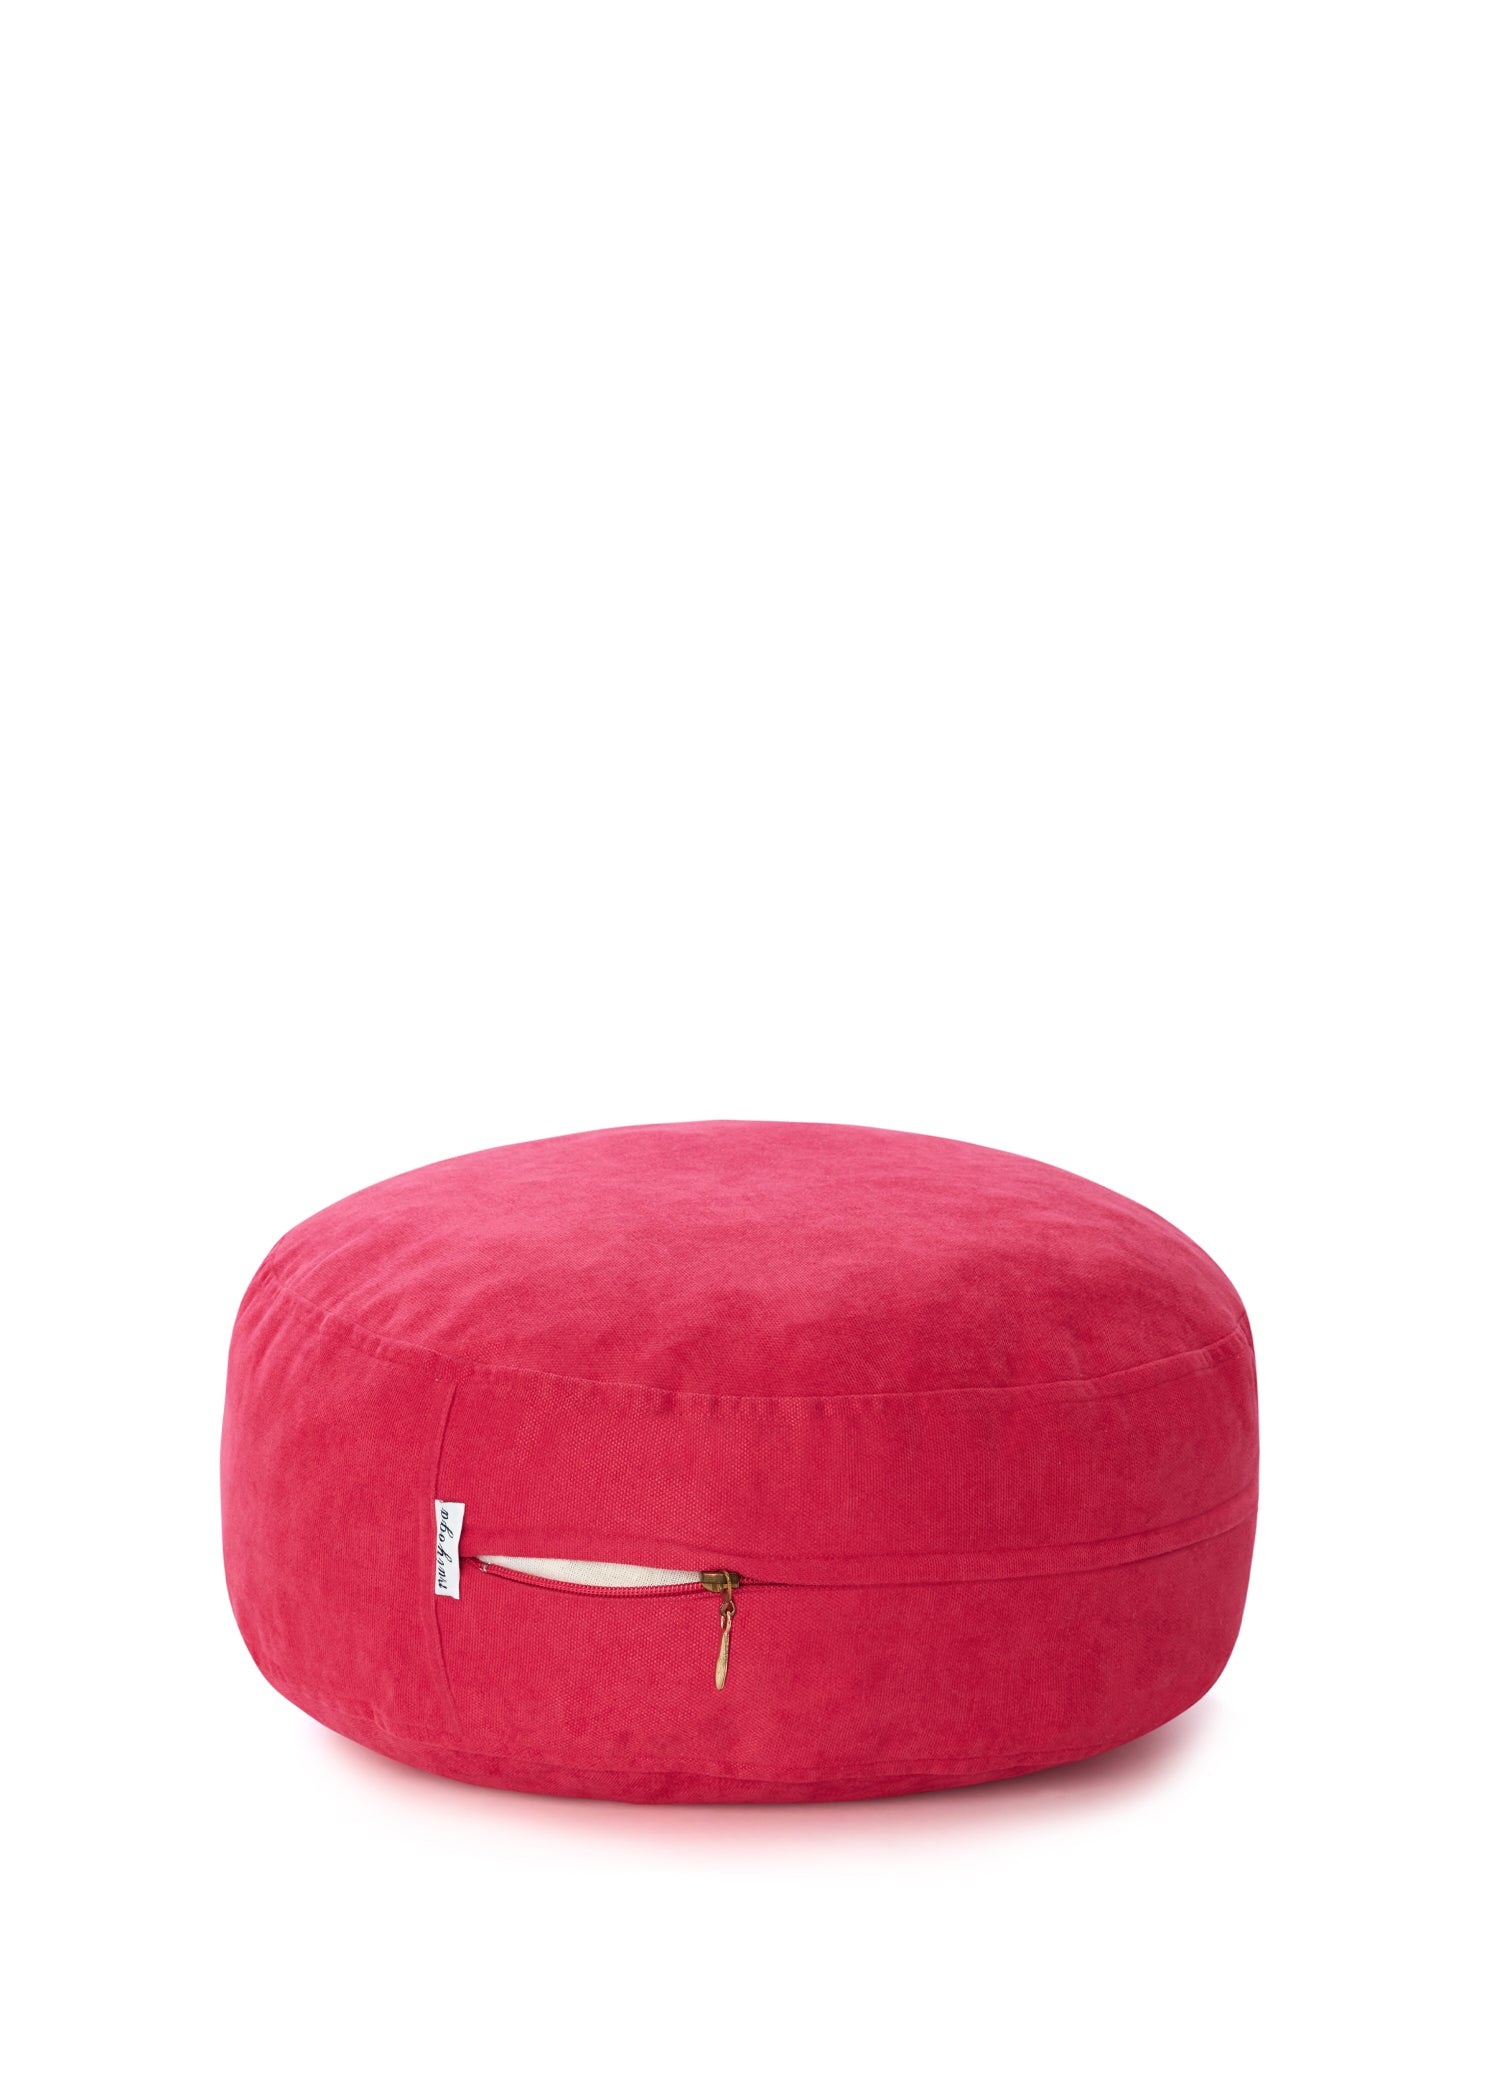 Pink Meditation Cushion 33 Cm Diameter